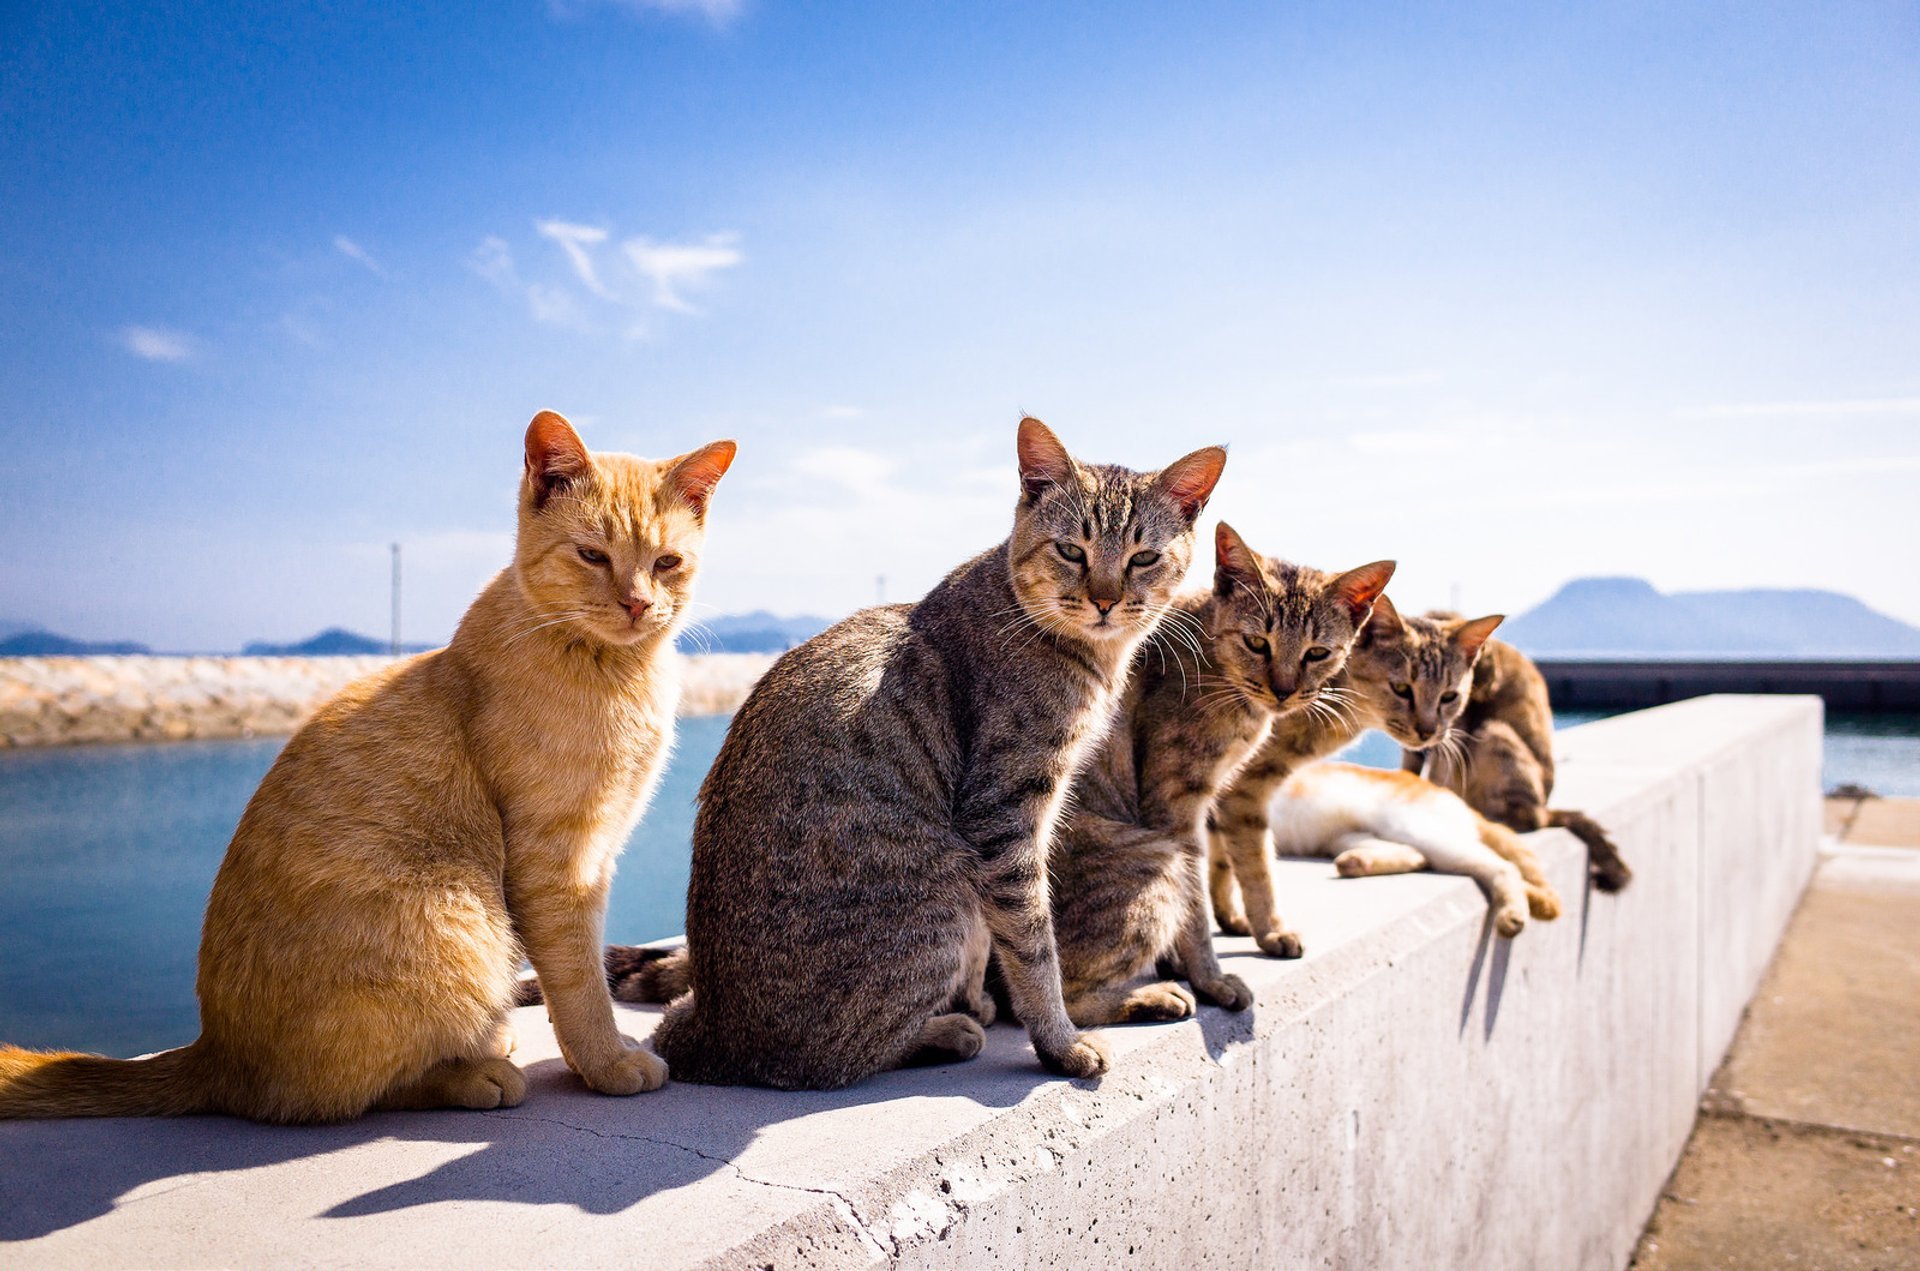 Aoshima (Cat Island)